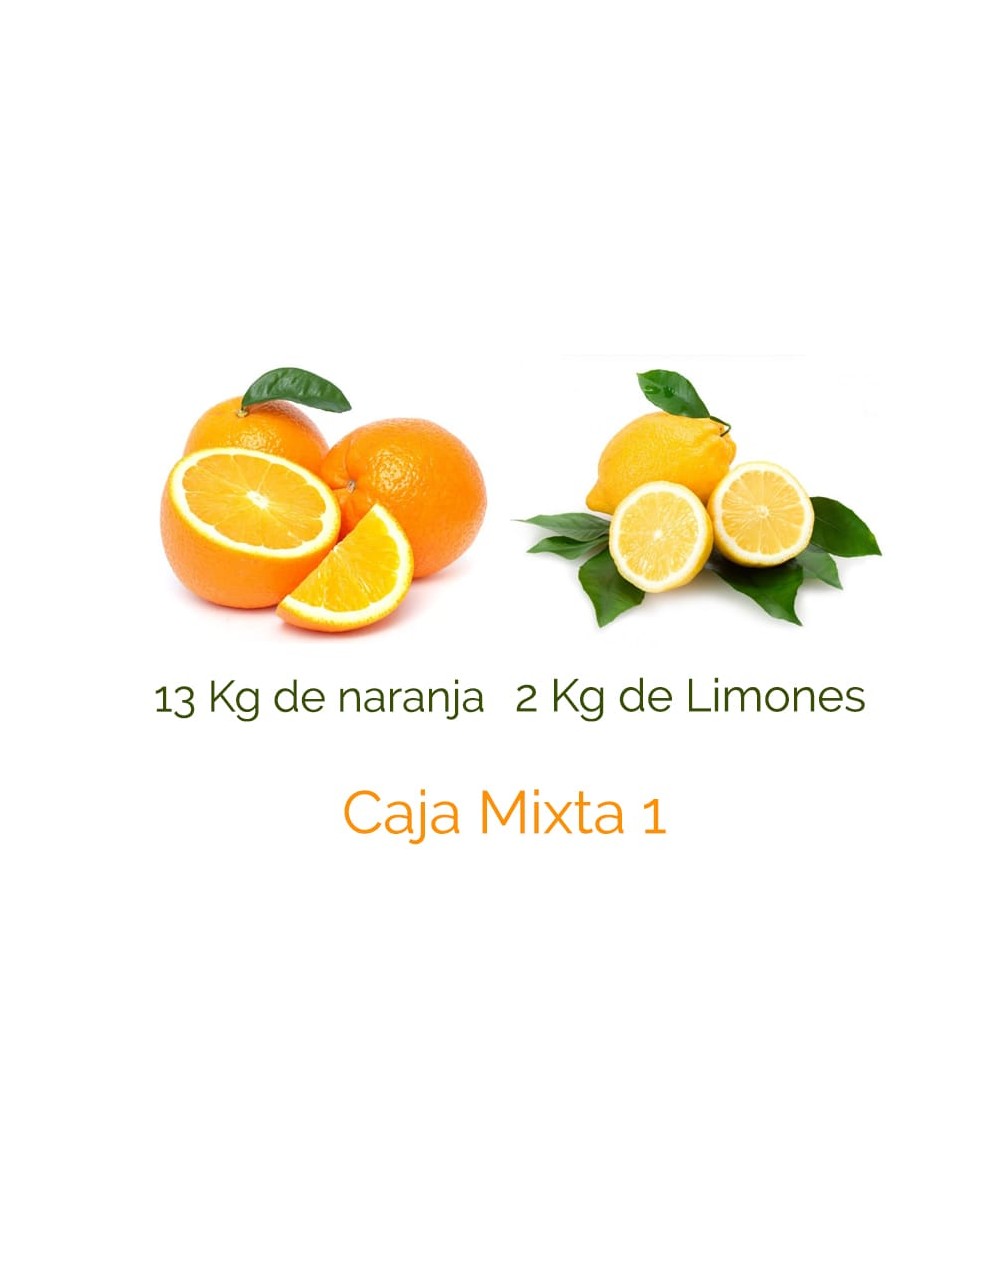 Caja Mixta 1 de 15 kg - Naranjas y limones